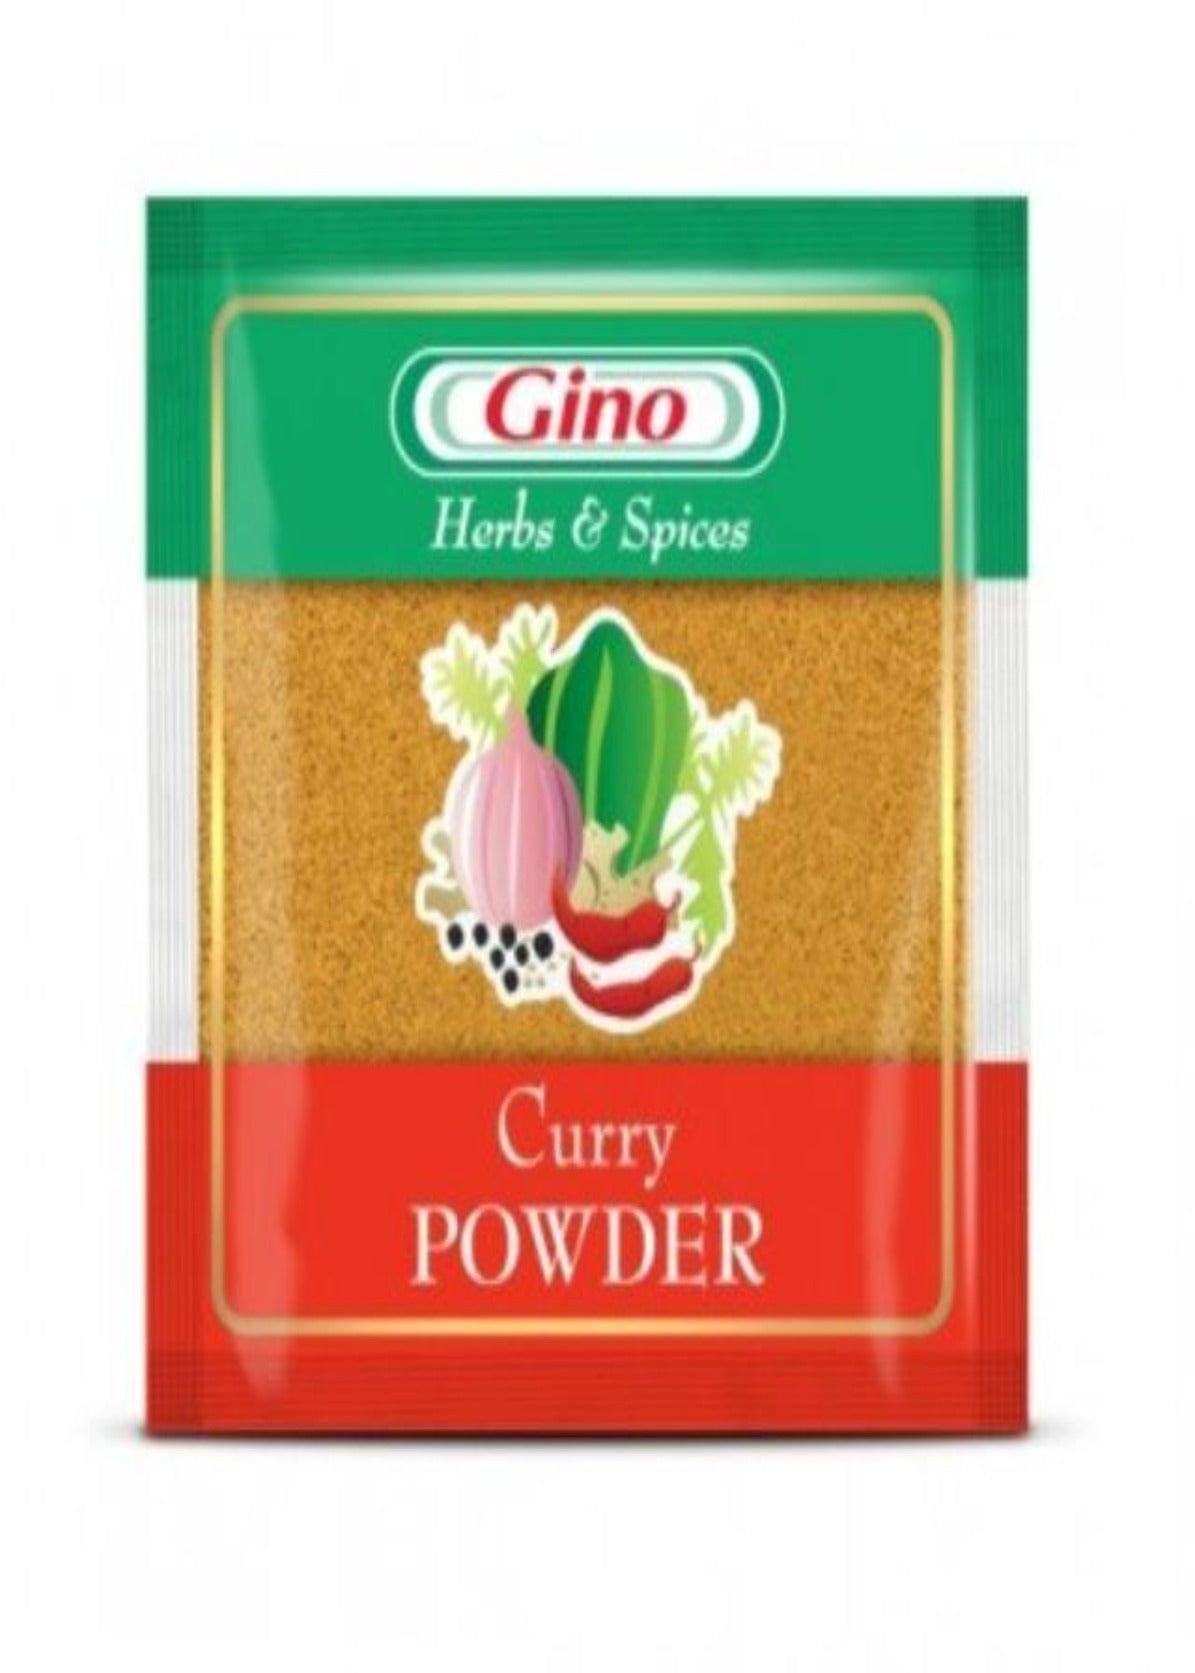 Gino Curry Powder Mixed Seasonings 4g x 12 Sachets - Walmart.com